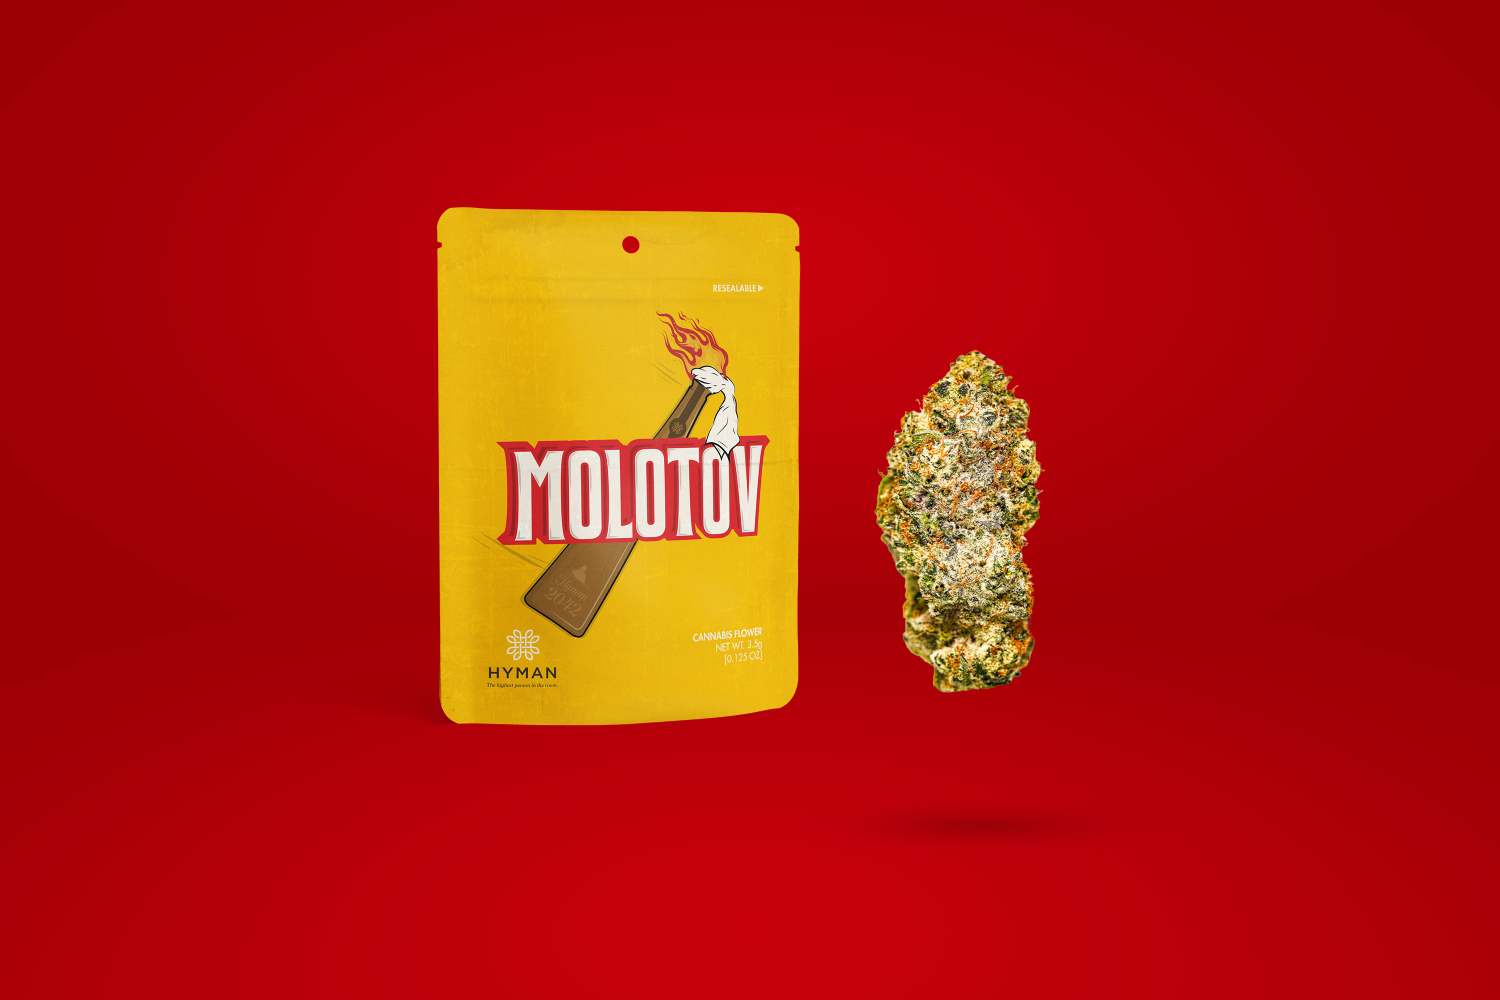 Molotov, Weed Buds, Hyman Cannabis Strain